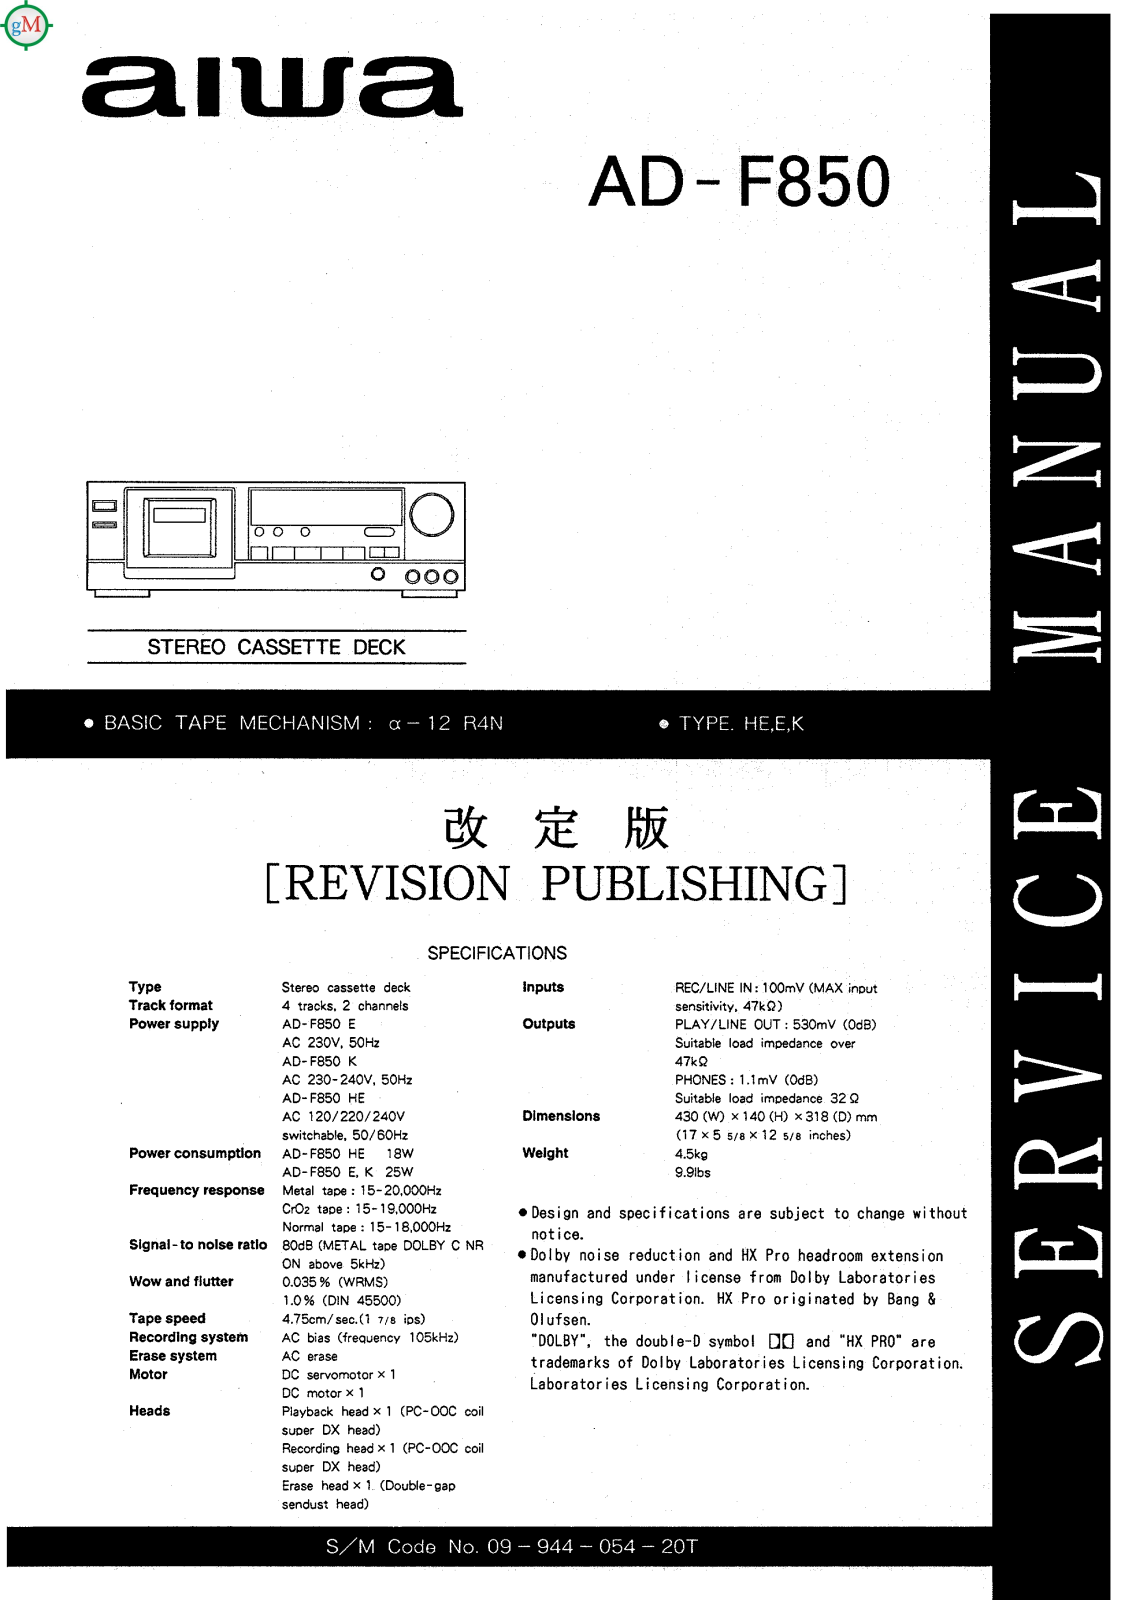 Aiwa ad-f850 Service Manual